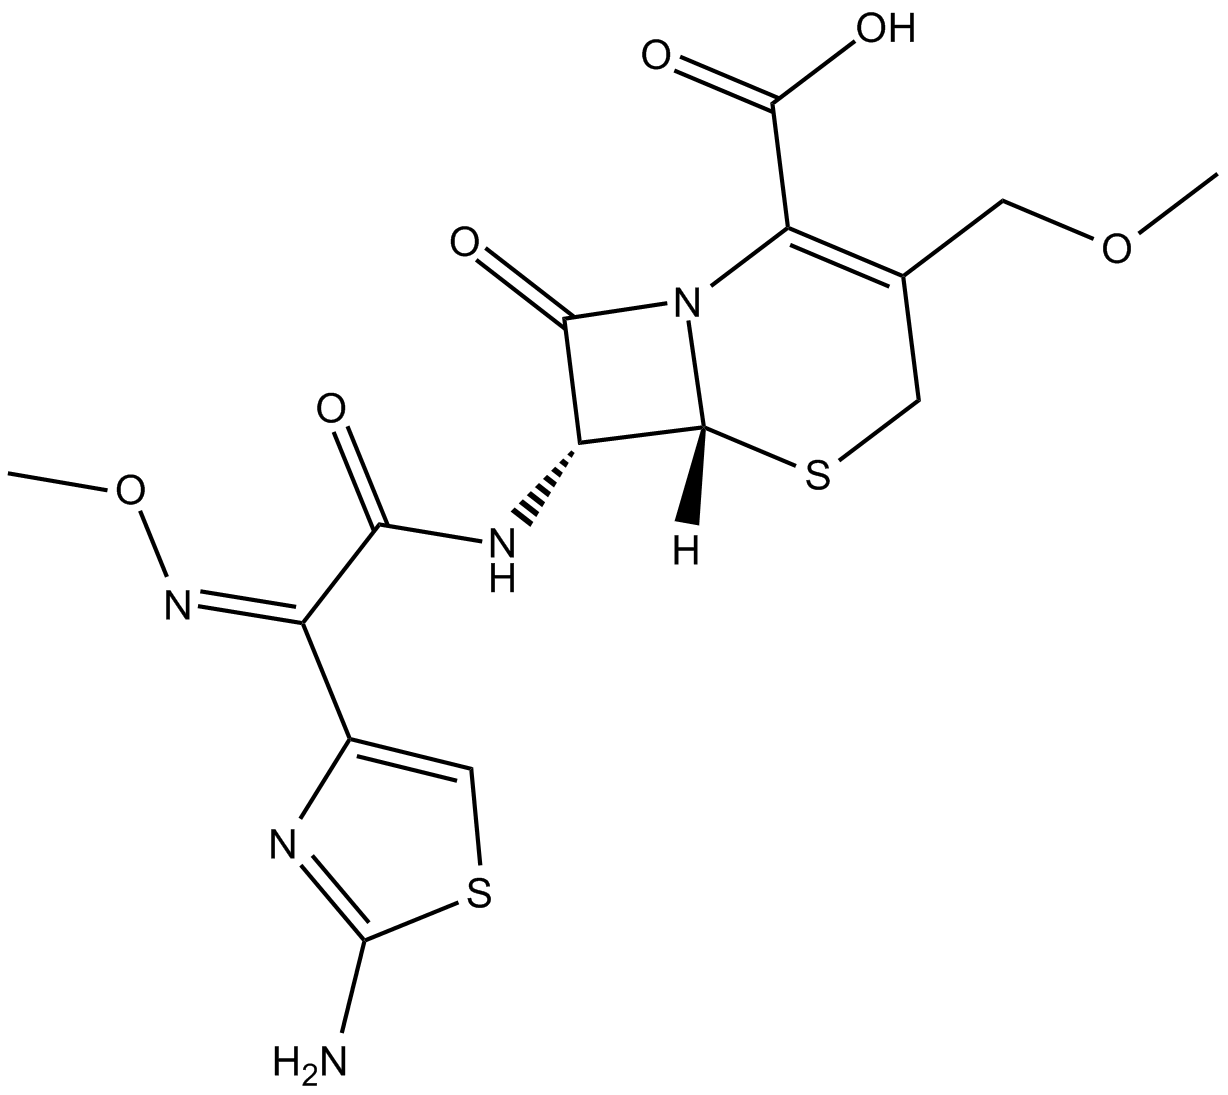 Cefpodoxime (free acid)